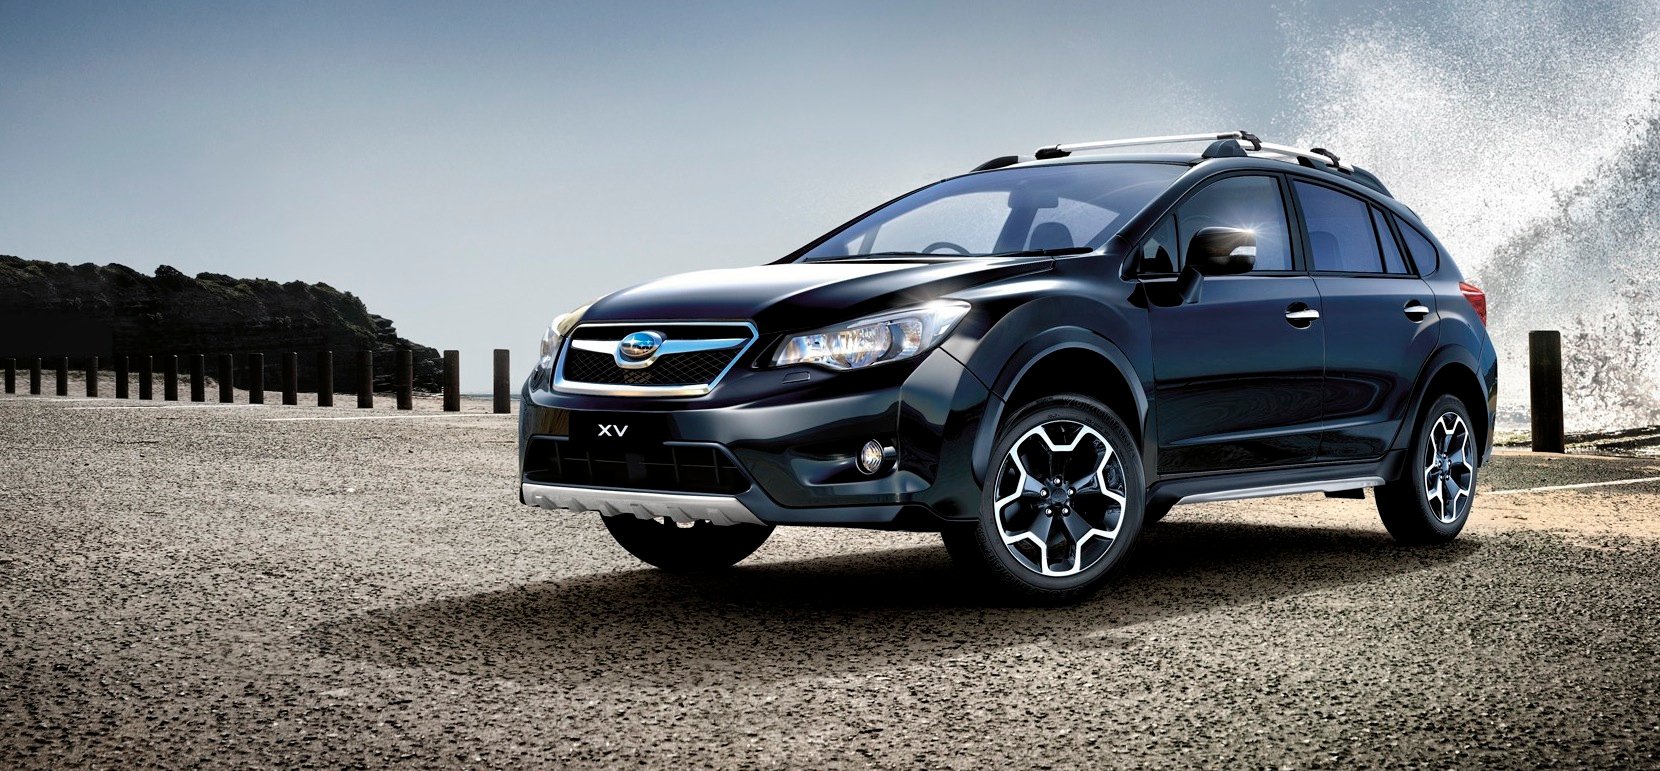 Subaru XV Black limited edition expands local SUV lineup